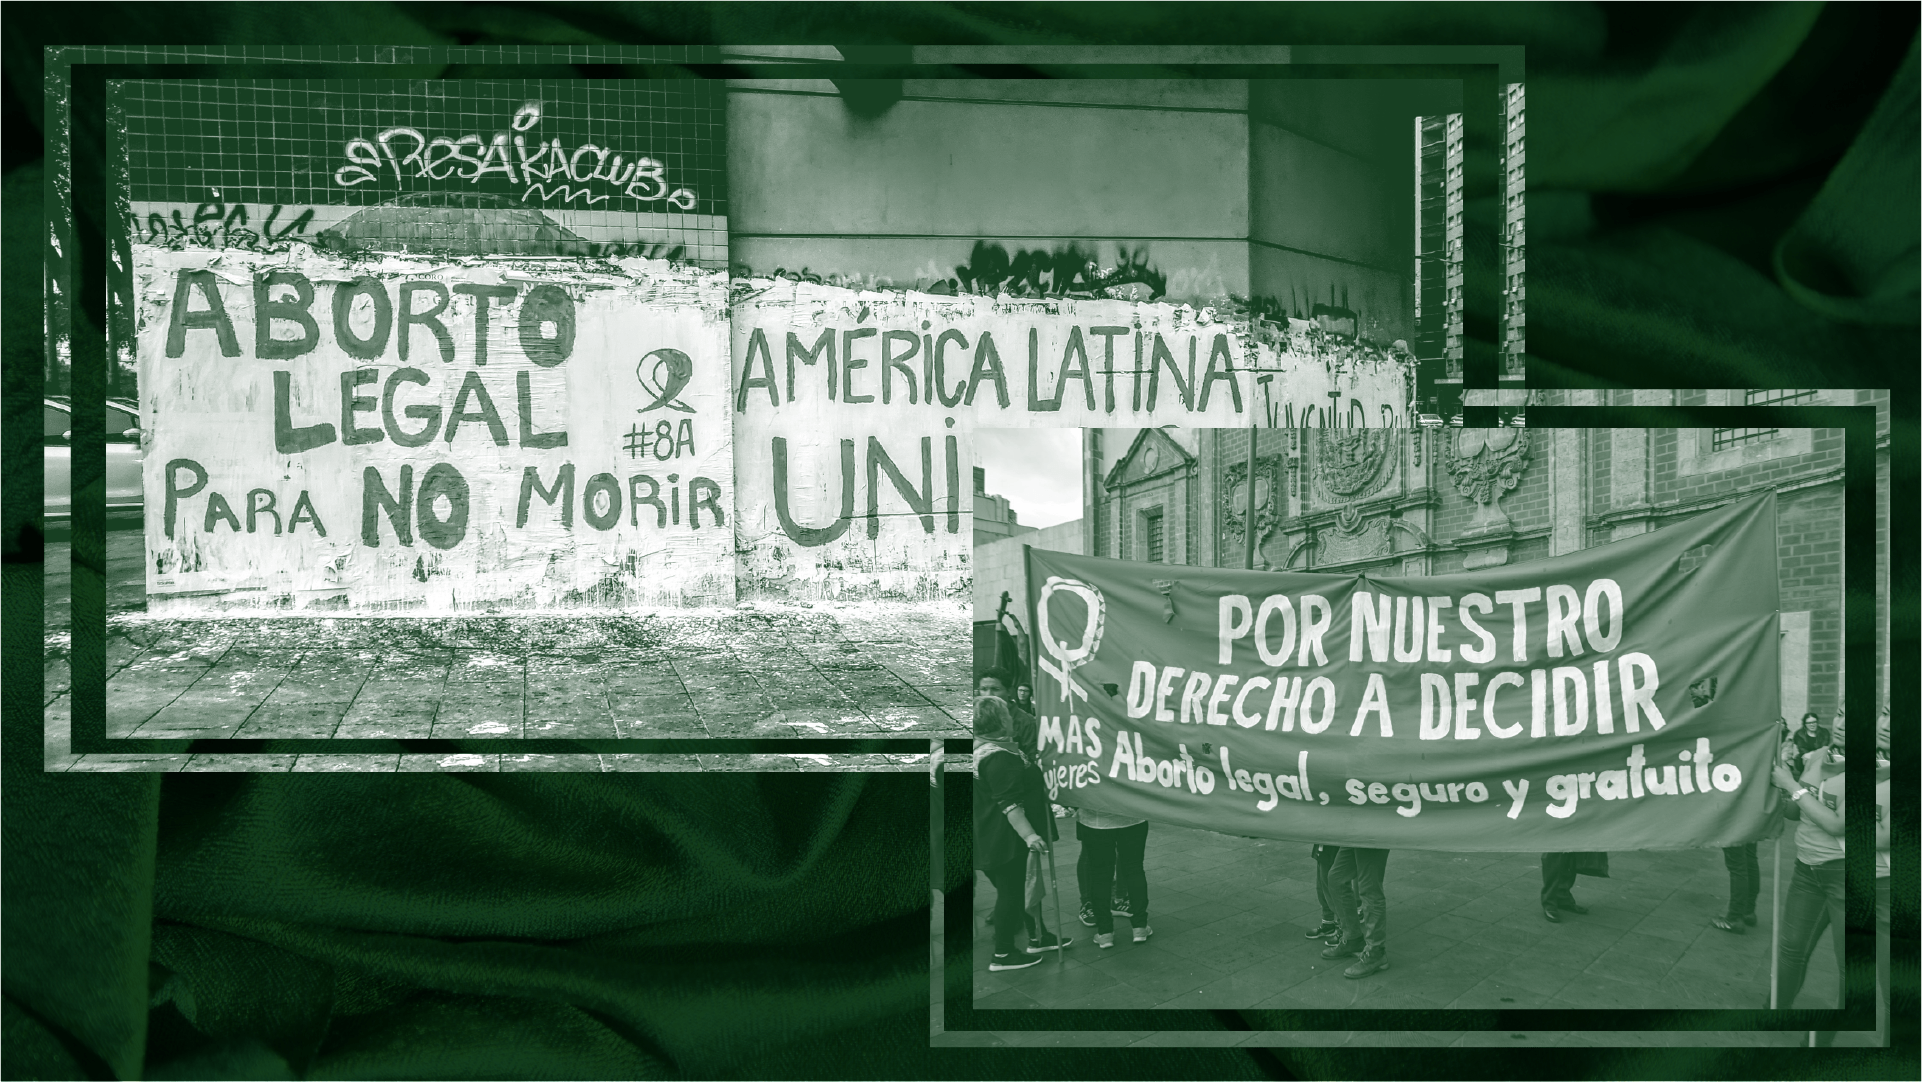 Two photos of abortion rights activists in Latin America holding aloft protest banners that read "America Latina Unidos", "Aborto Legal" and "Por nuestro derecho a decidir".